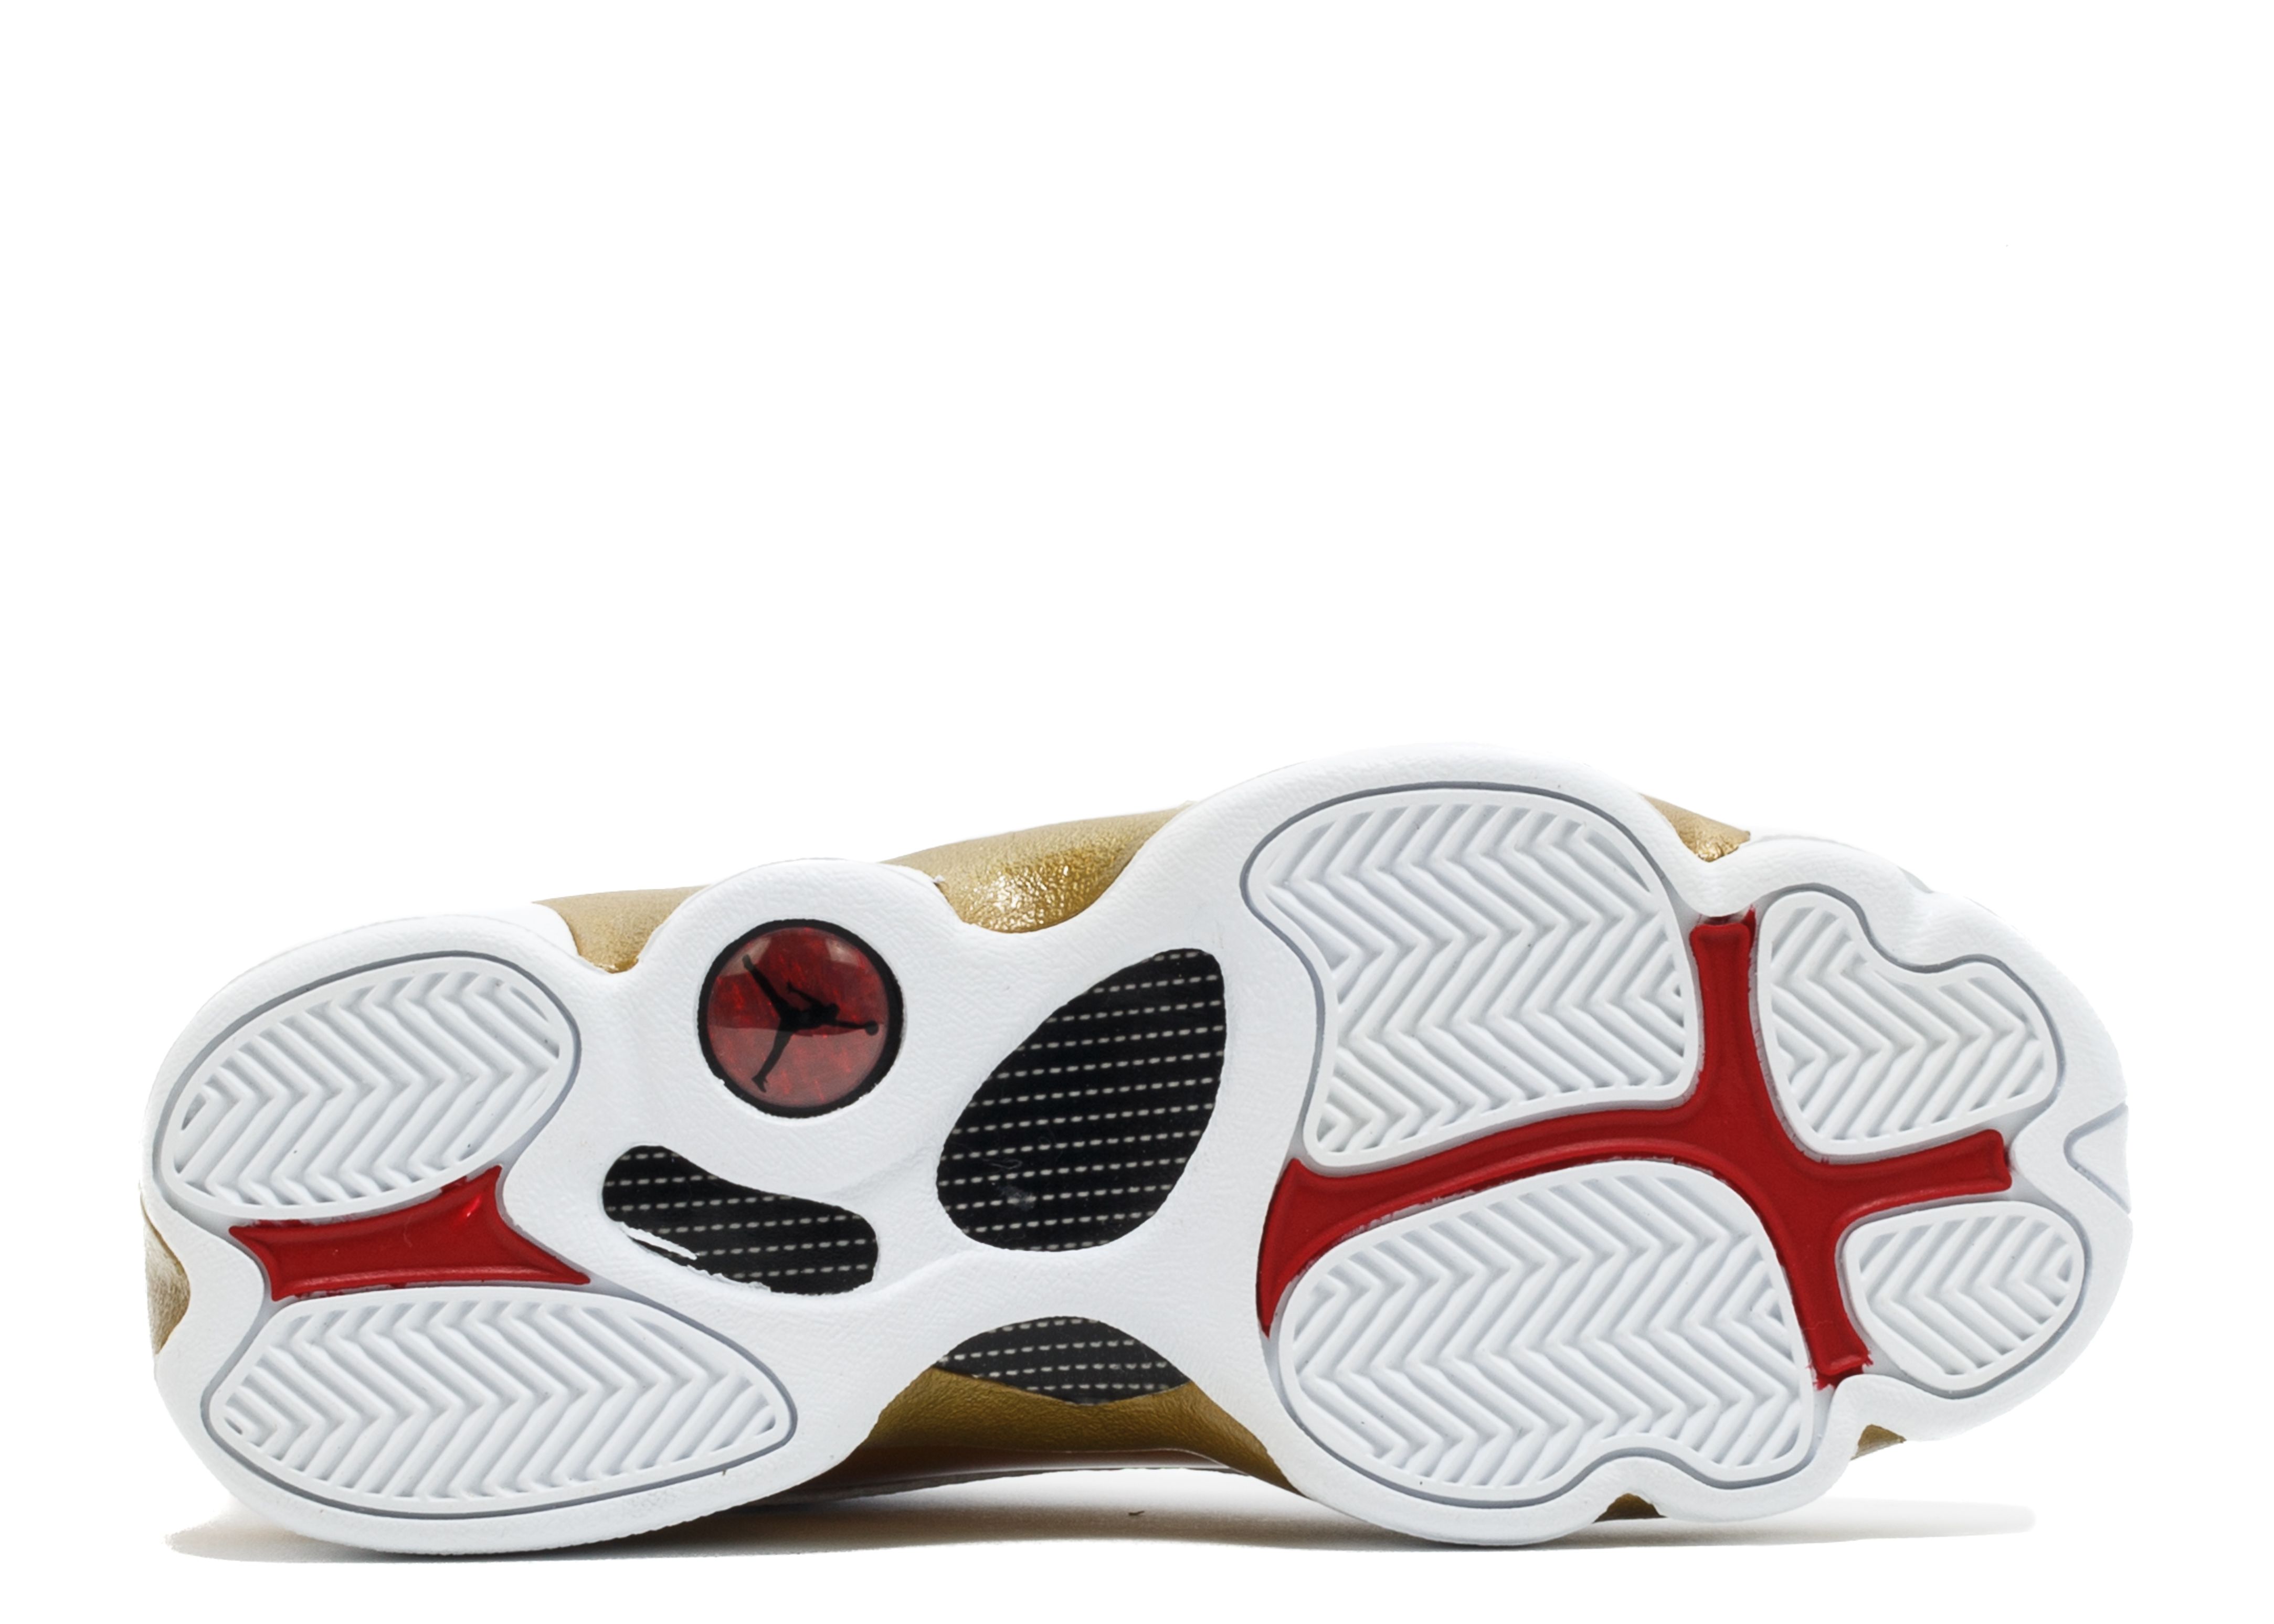 Air Jordan 13 Retro 'Defining Moments' - Air Jordan - 414571 135 -  white/varsity red/metallic gold